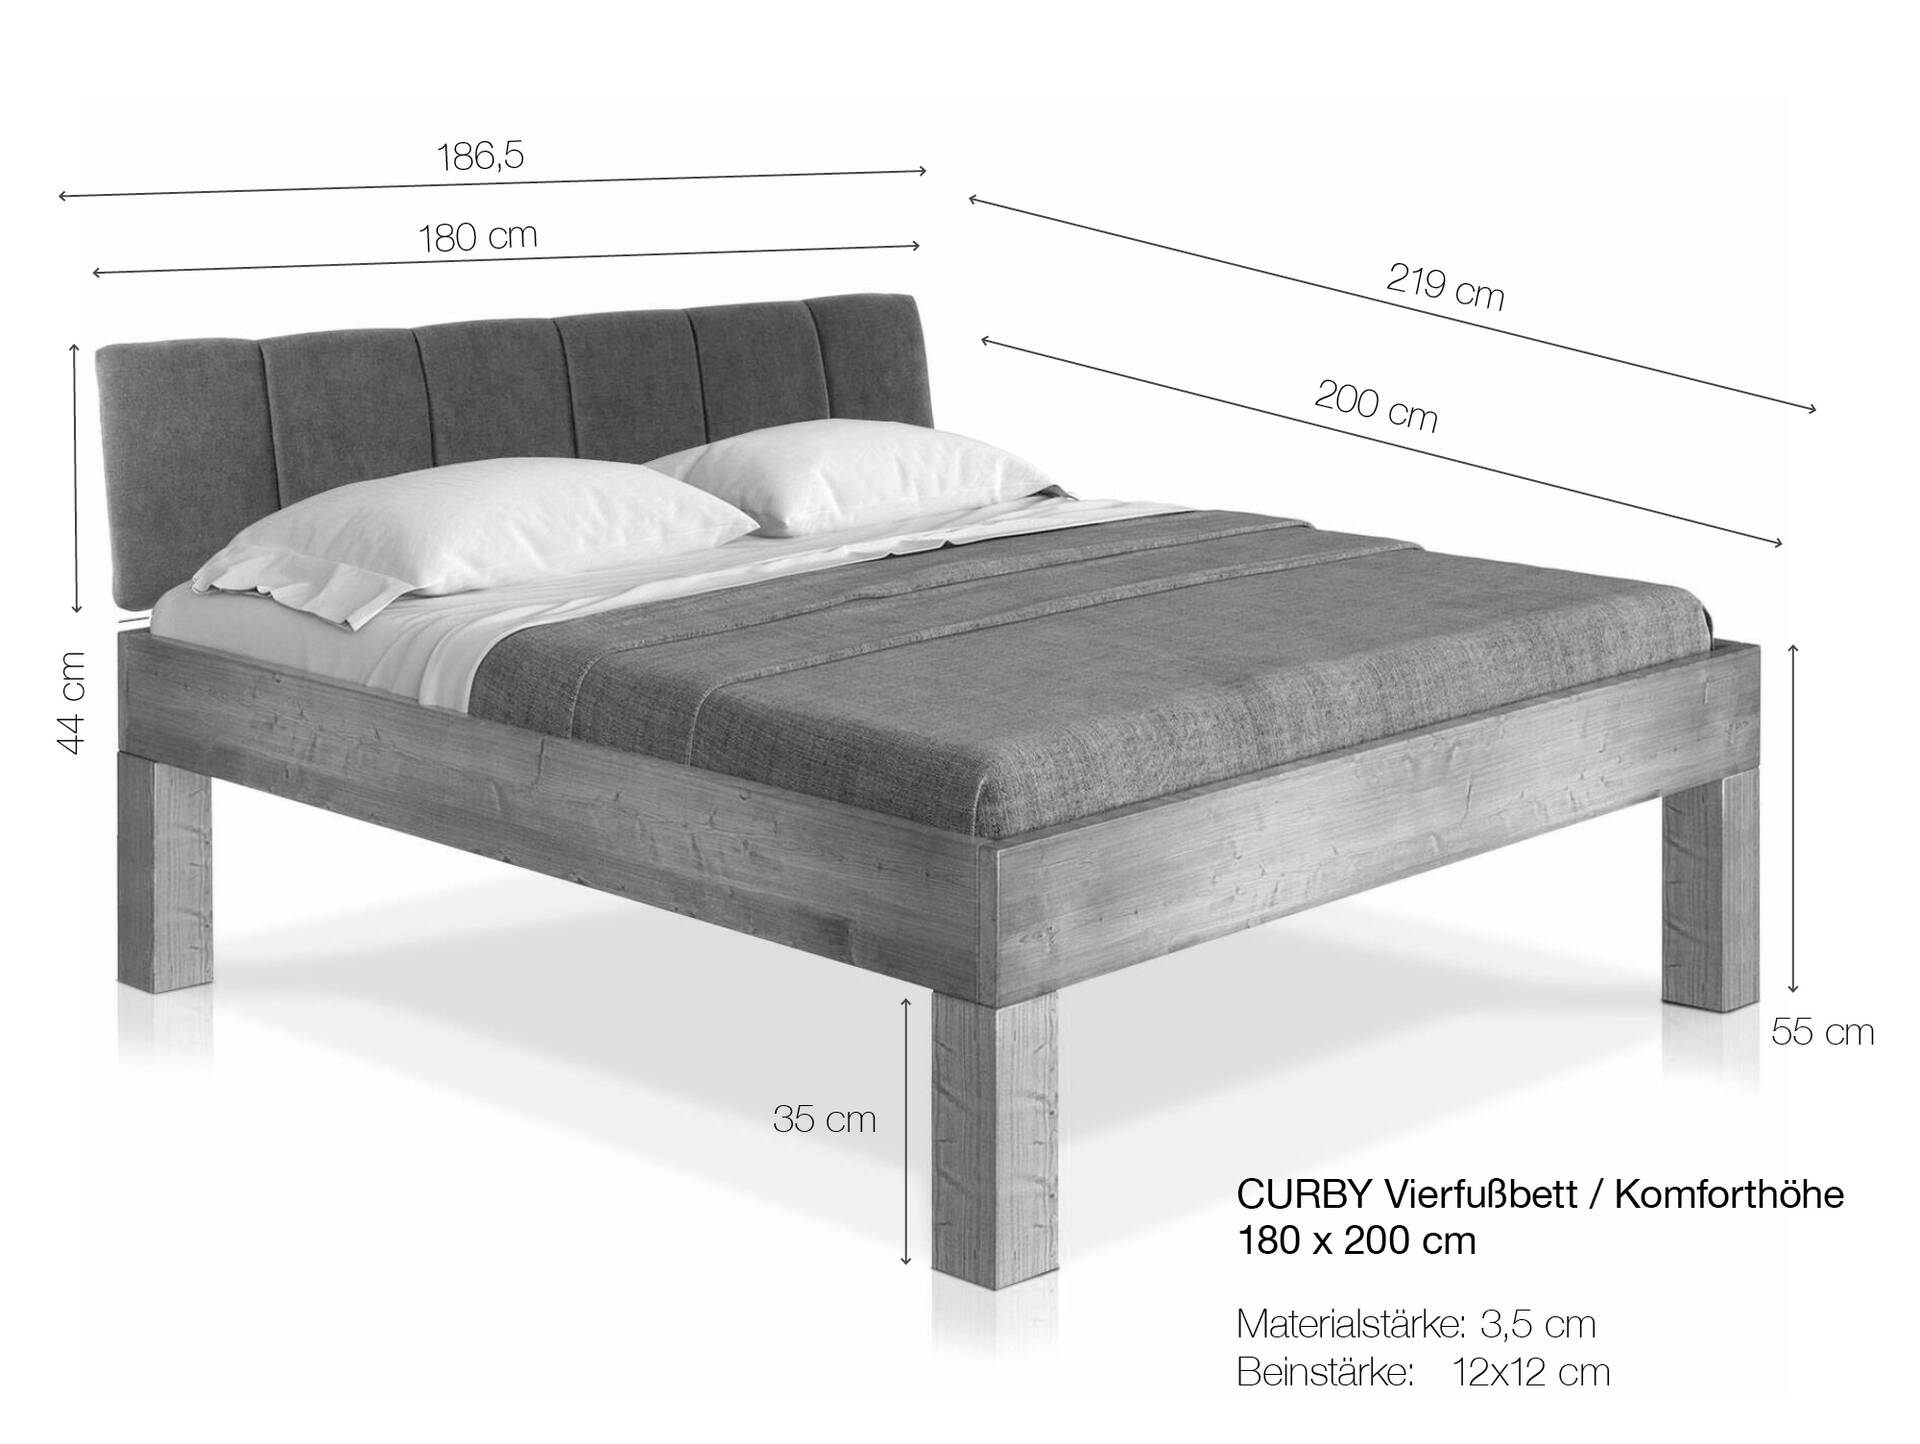 CURBY 4-Fuß-Bett mit Polster-Kopfteil, Material Massivholz, rustikale Altholzoptik, Fichte 180 x 200 cm | vintage | Stoff Anthrazit mit Steppung | Komforthöhe